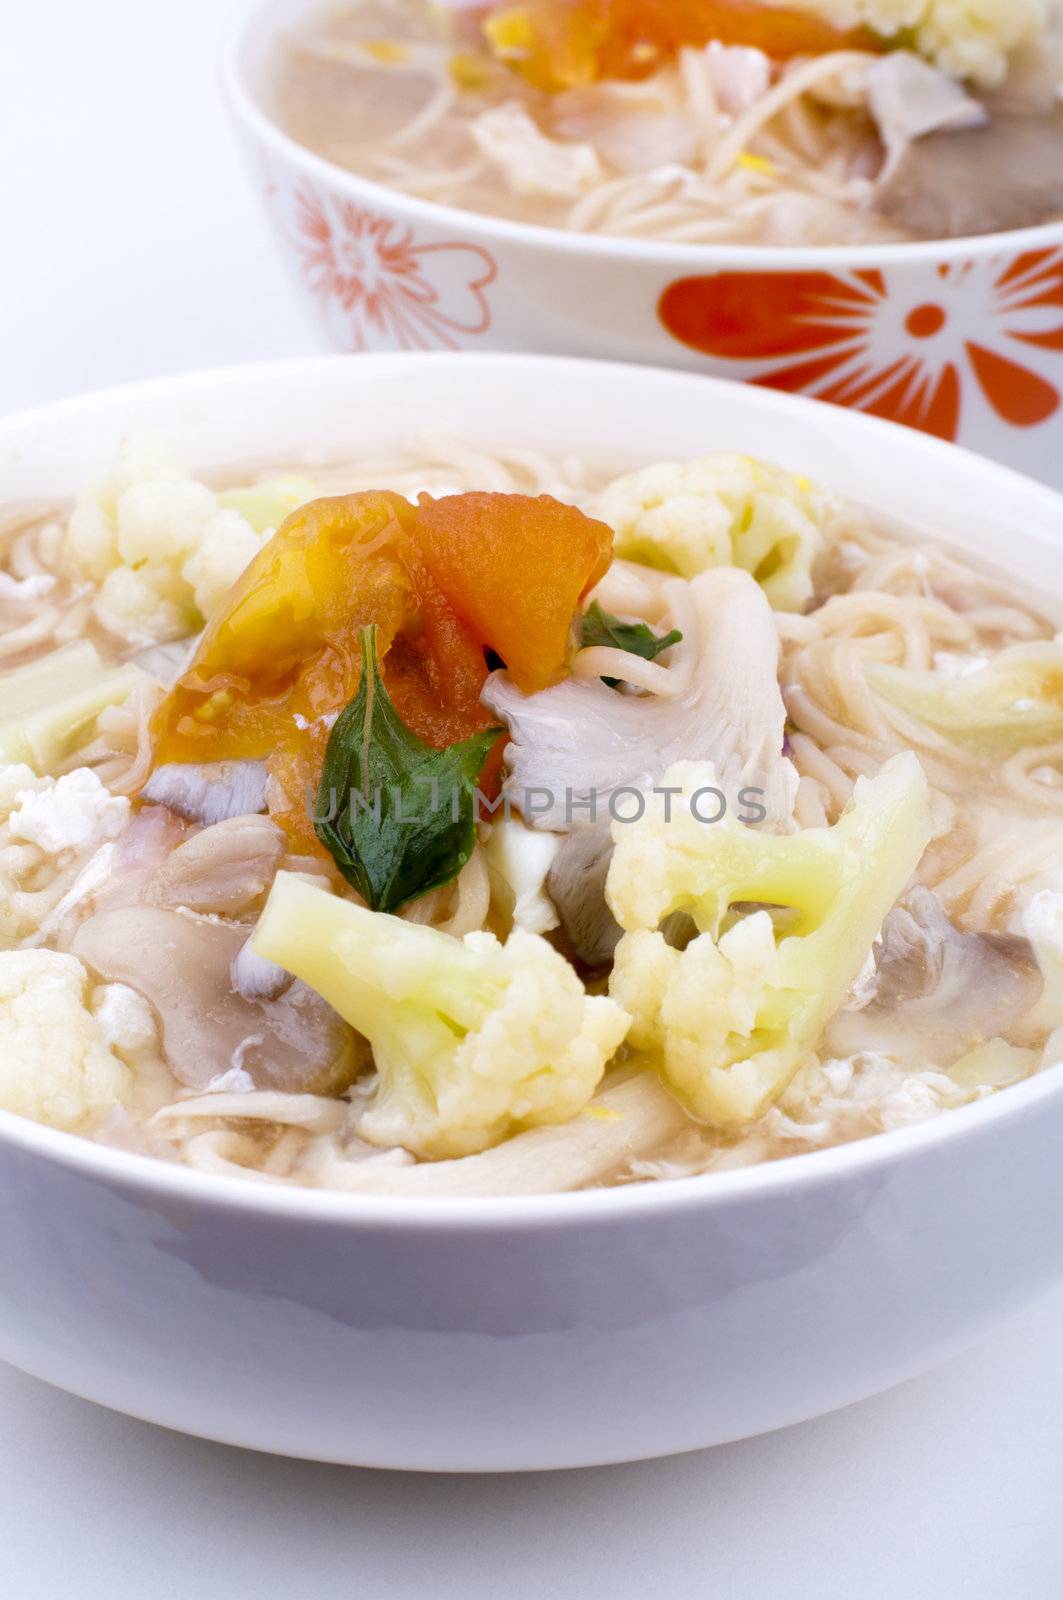 Vegetarian soup noodles. by szefei